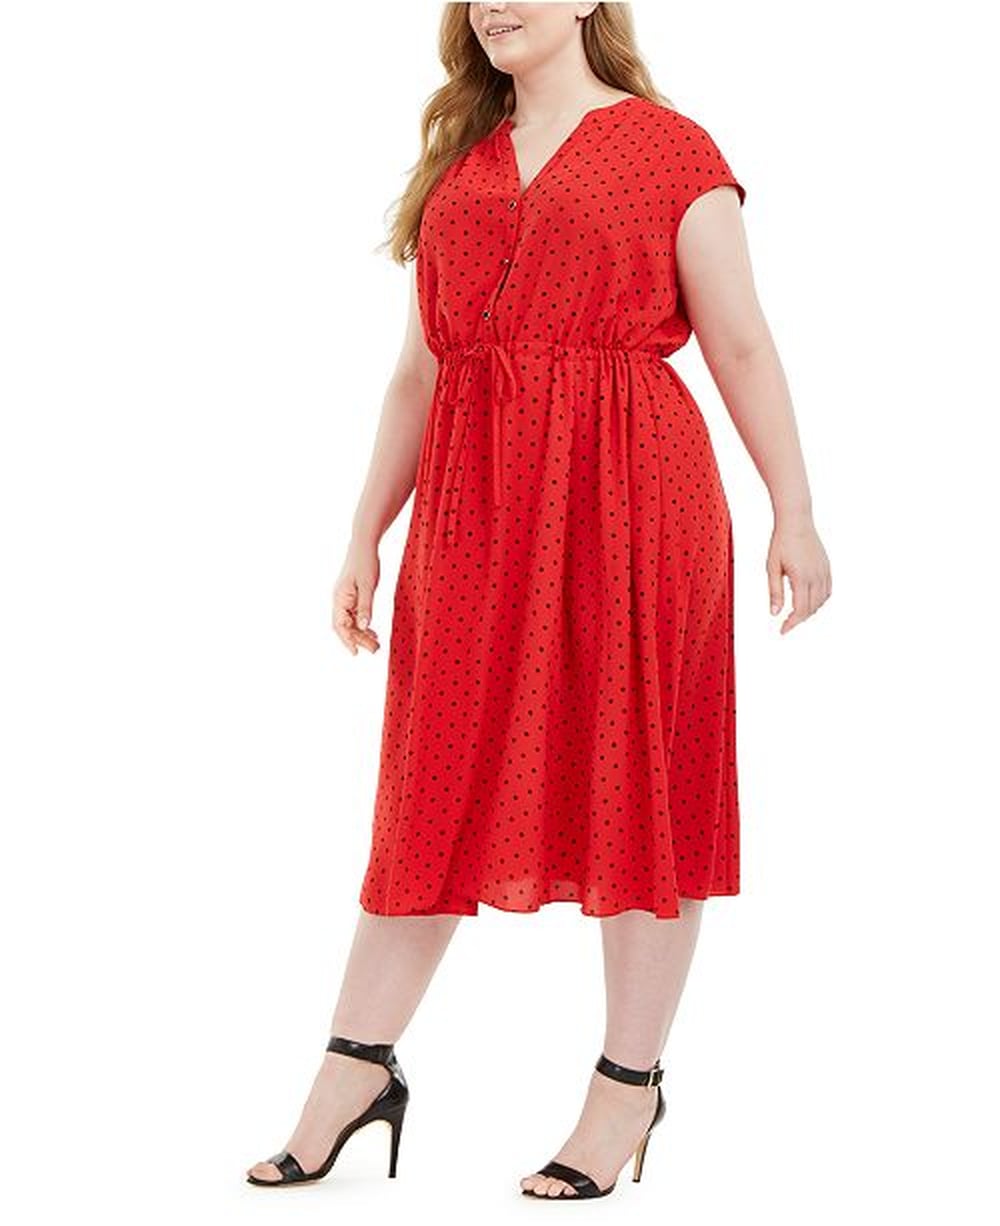 The Best Dresses for Plus-Size Women at Macy's | POPSUGAR Fashion